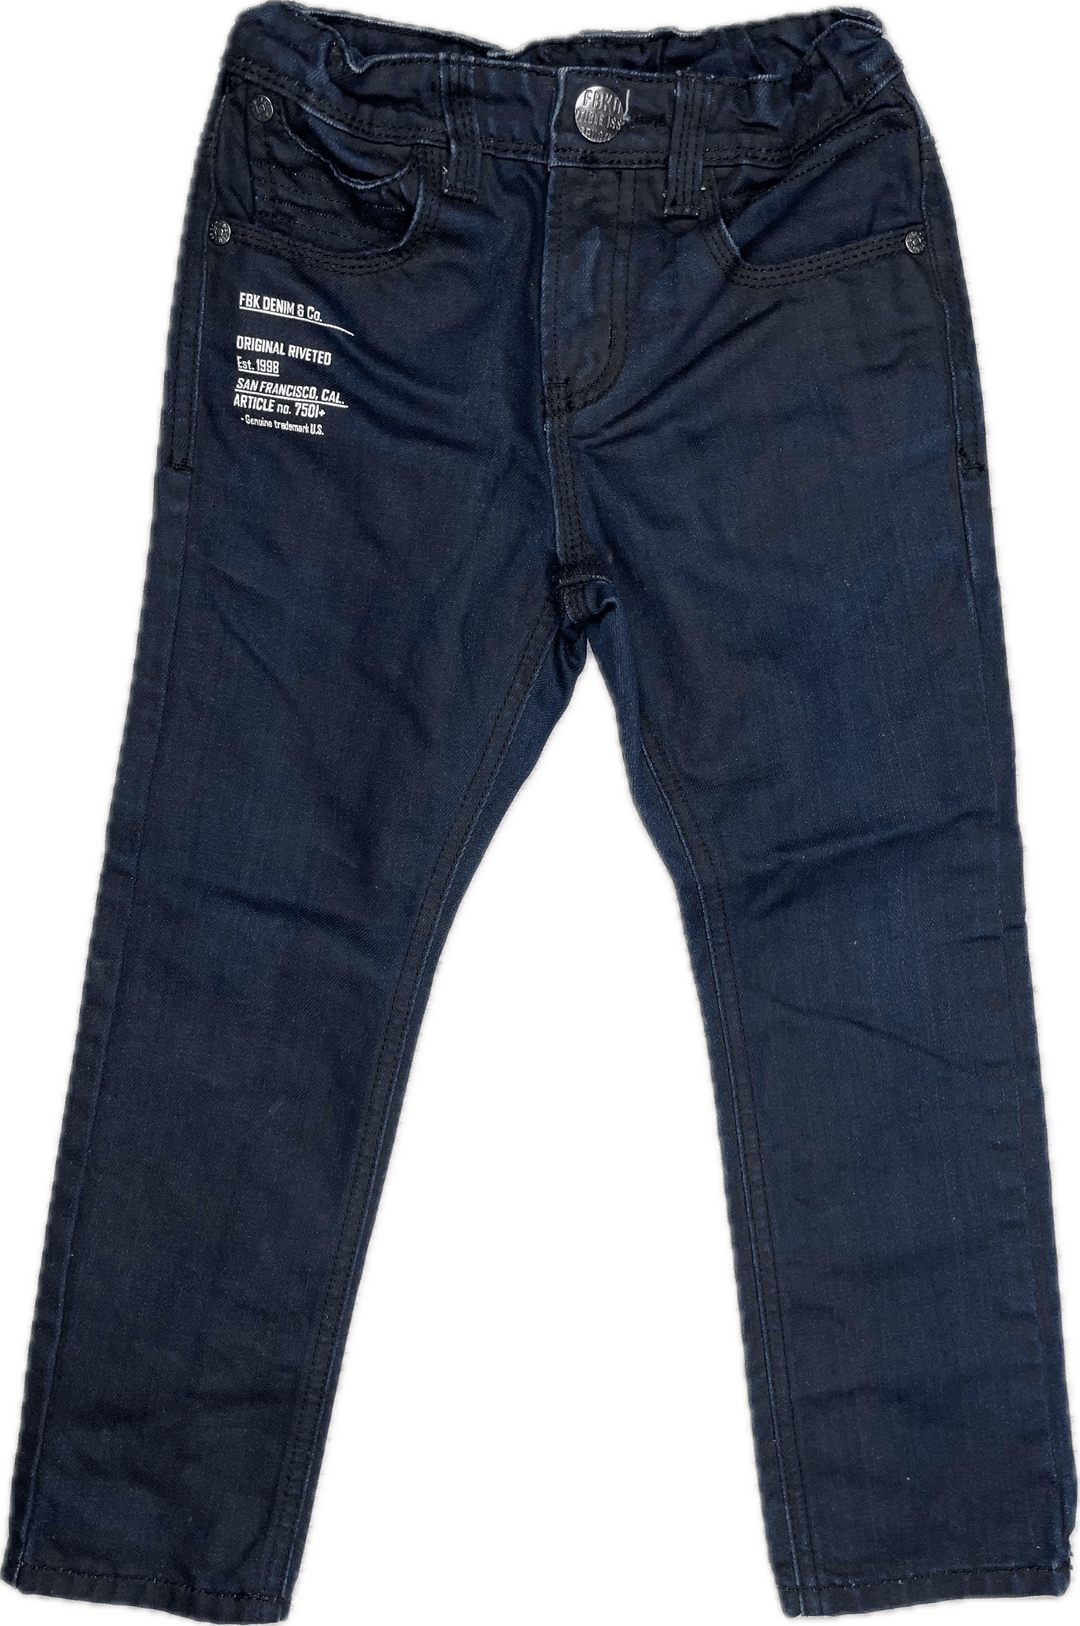 Fresh Baked Slim Straight Boys Logo Jeans - Size 5 - Jean Pool